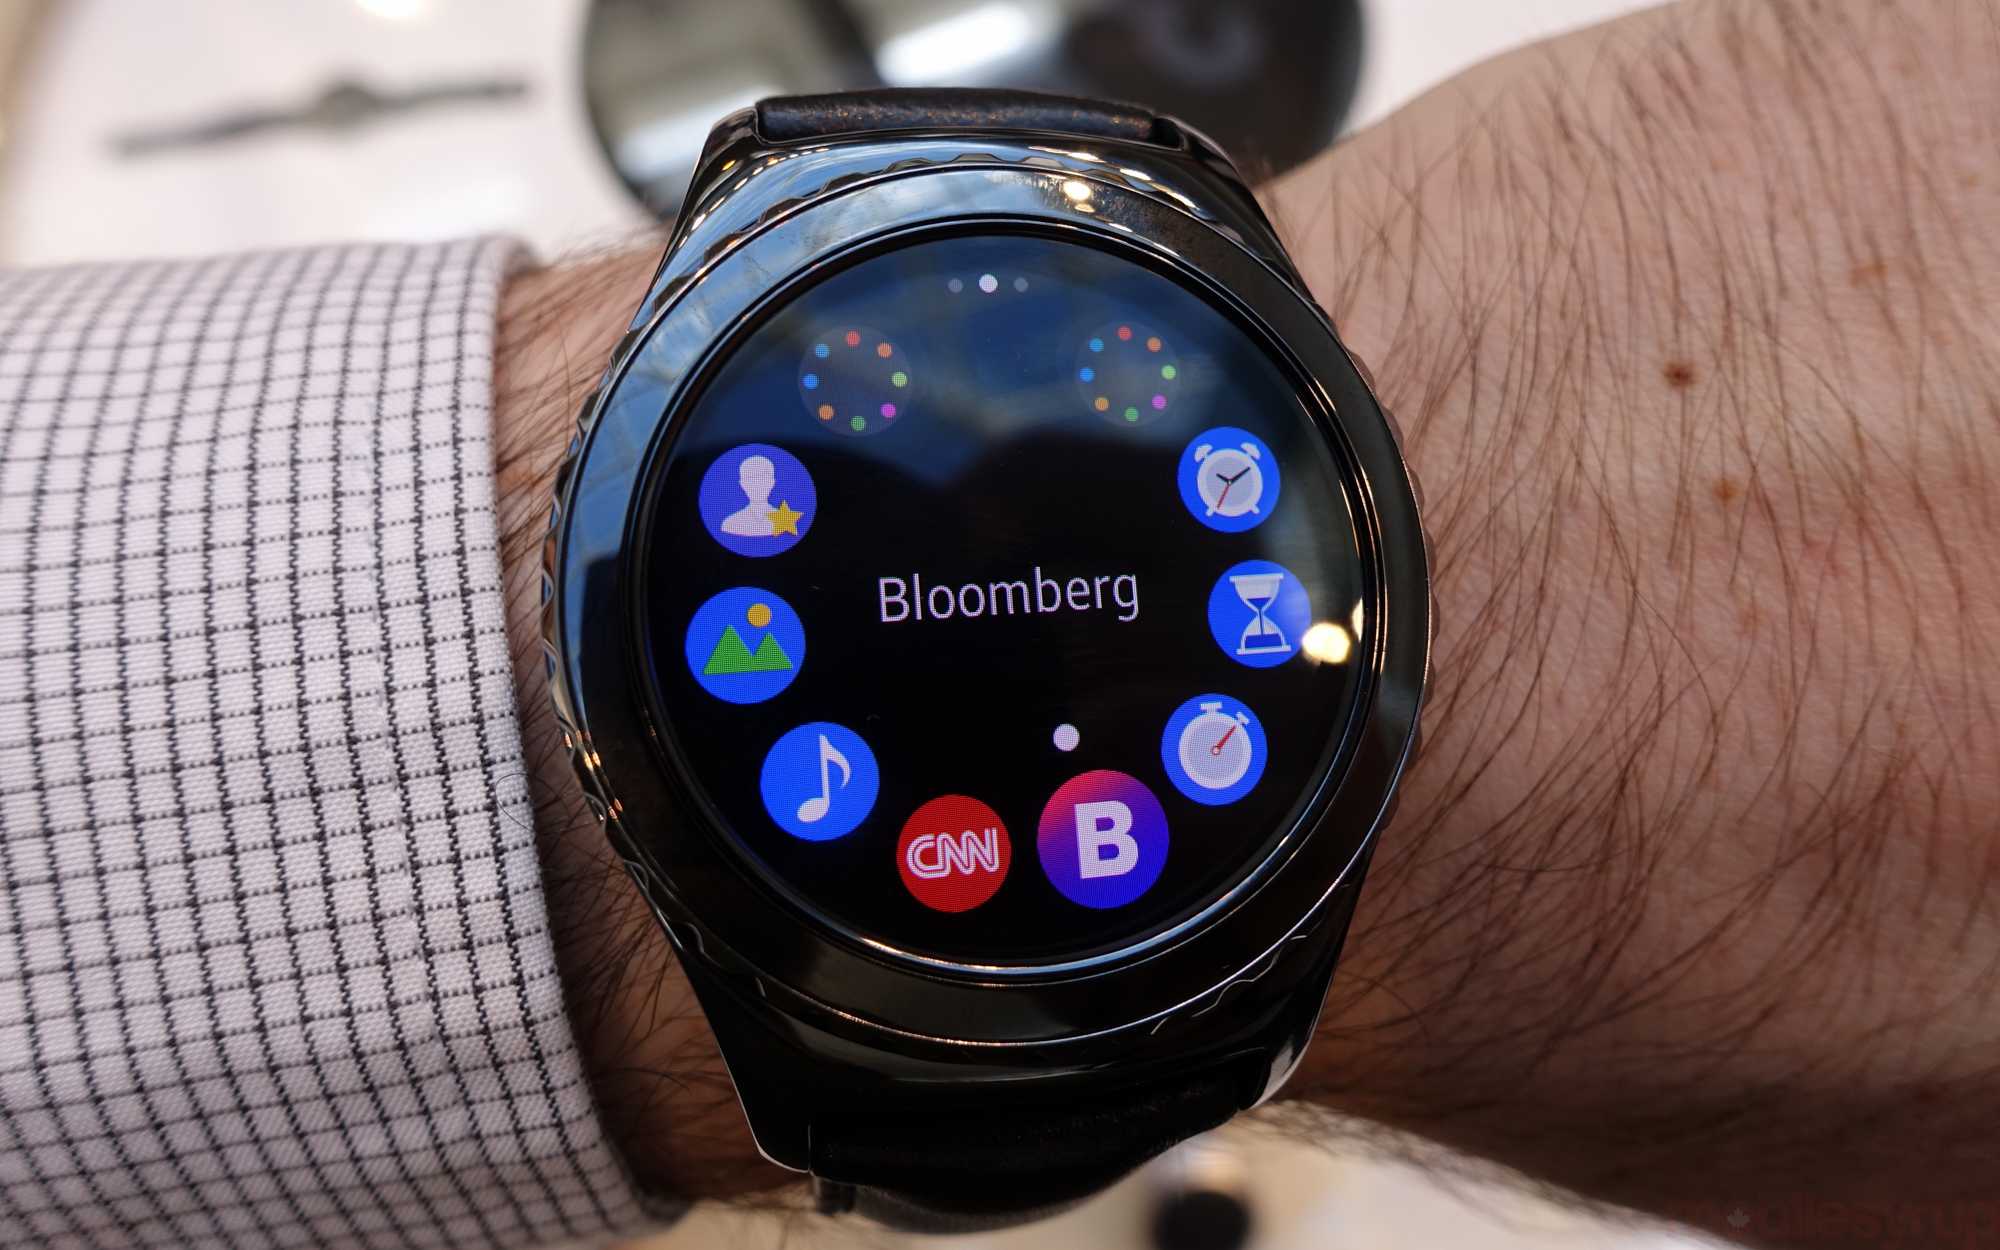 Samsung gear s — умные часы стали на шаг ближе к смартфону